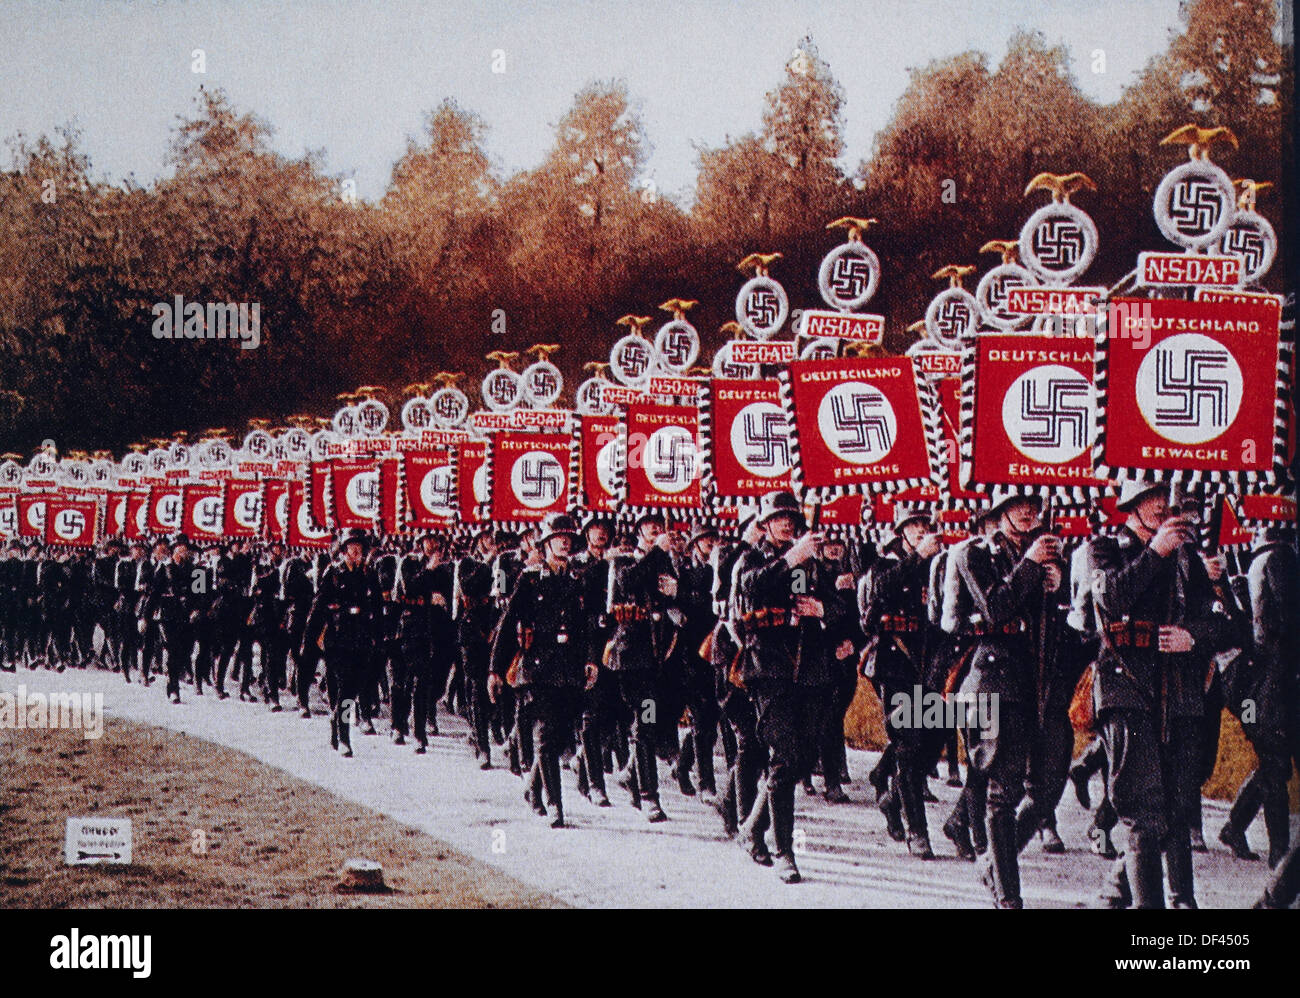 Les troupes SS allemand palier en mars Champ Zeppelin, Nürnberg, Allemagne, 1933 Banque D'Images